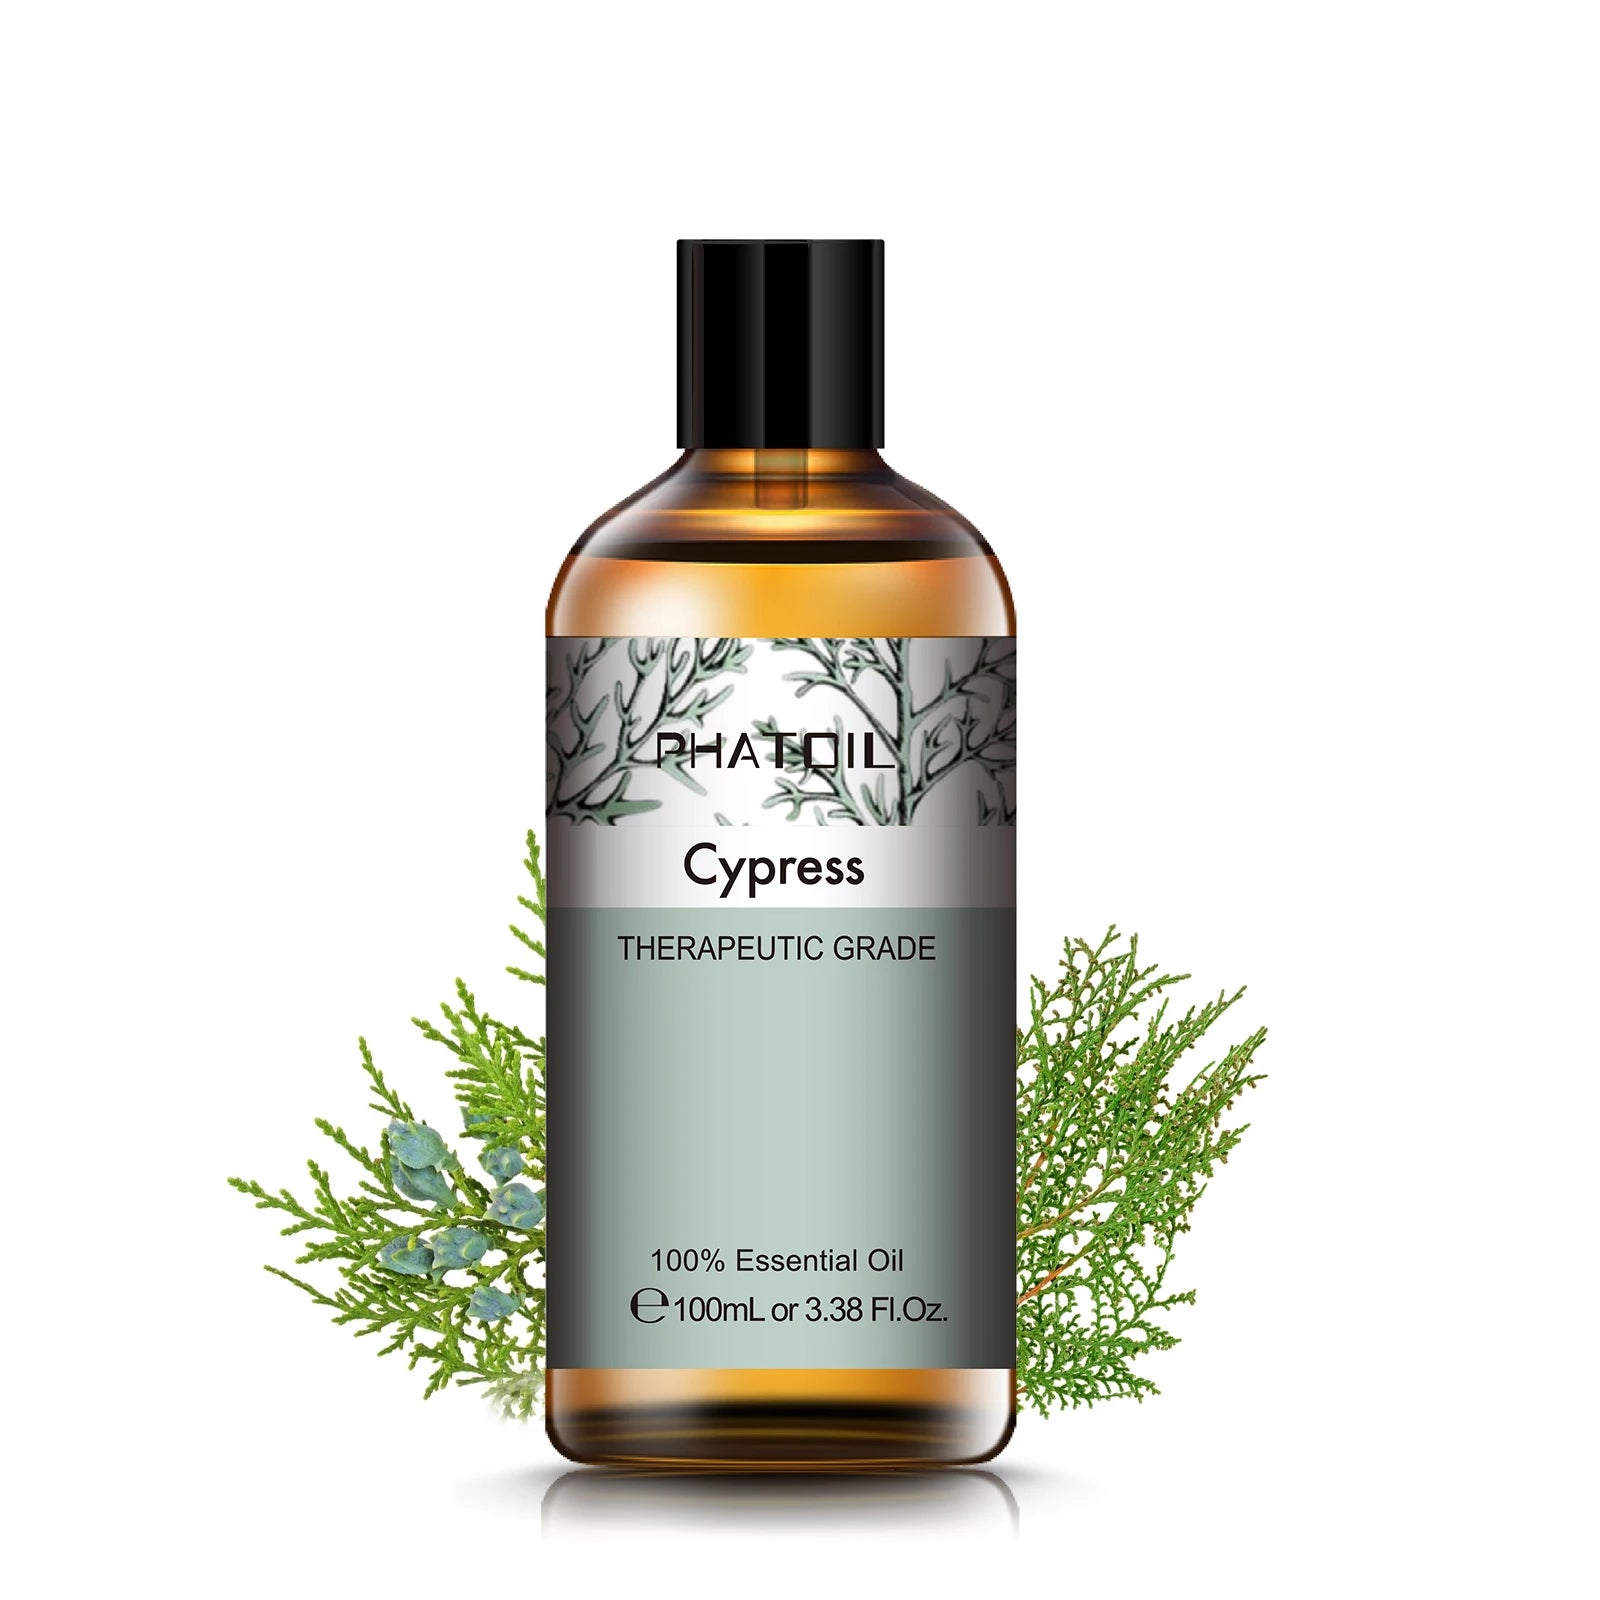 cypress essential oils phatoil